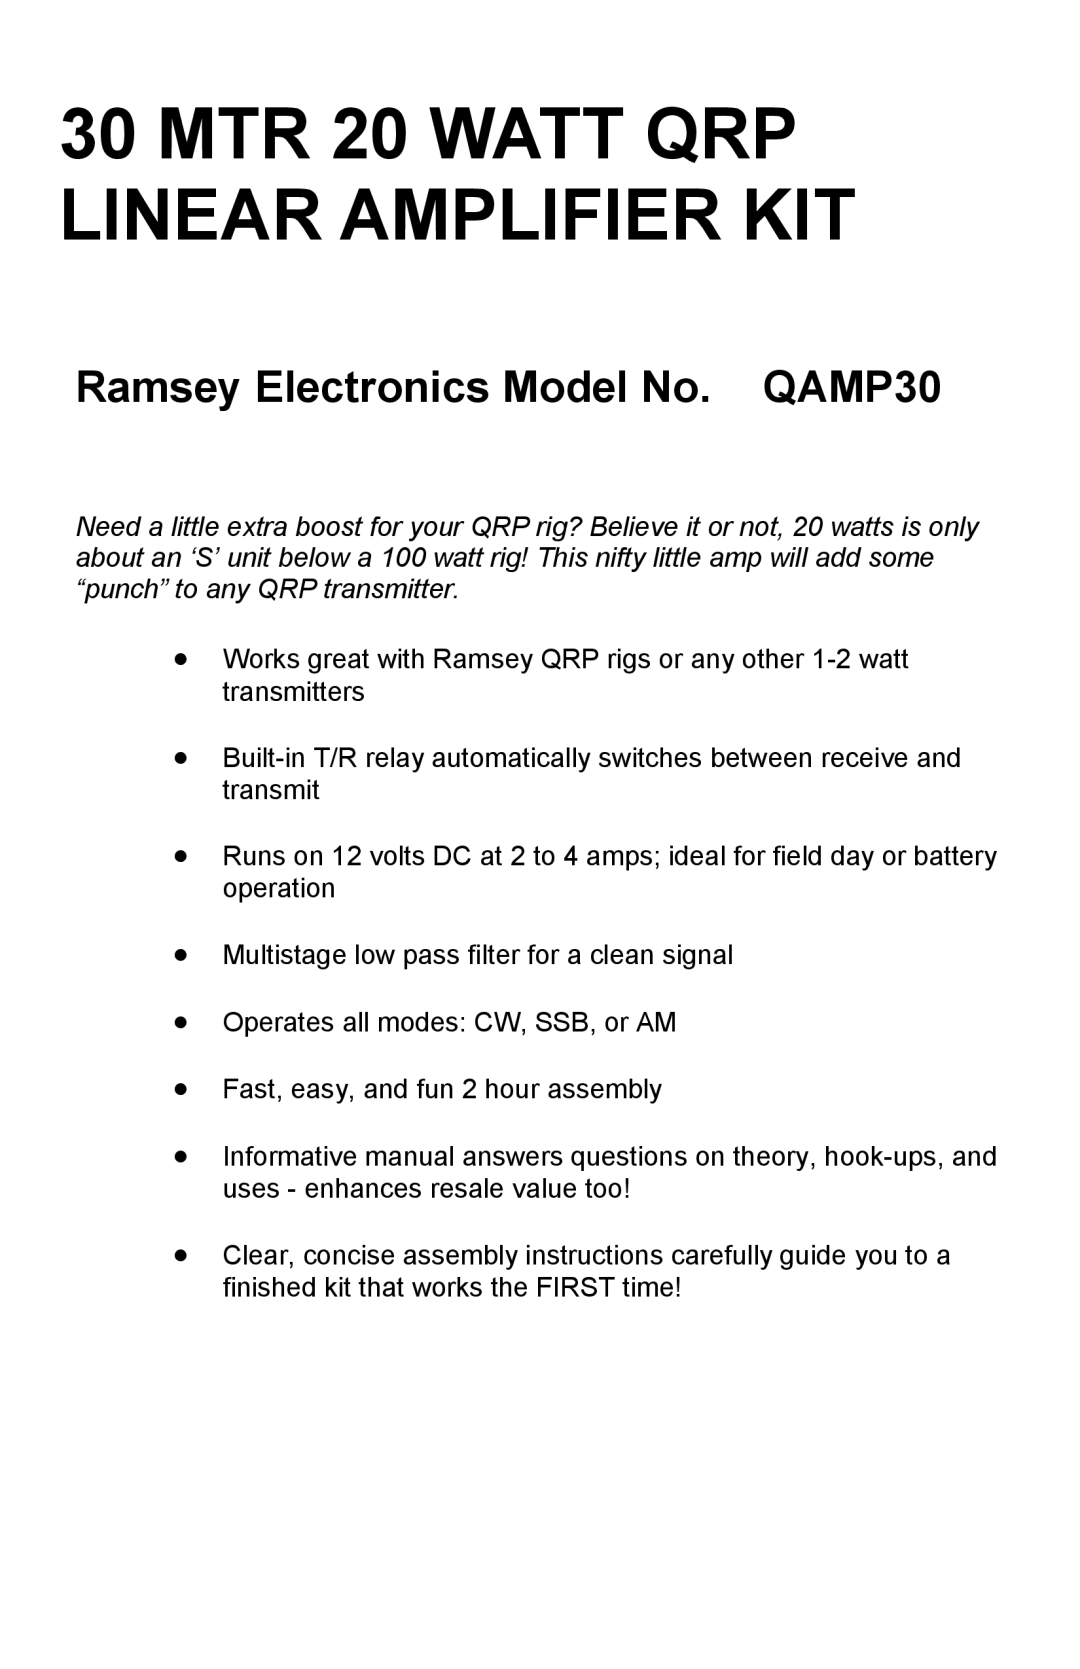 Ramsey Electronics manual MTR 20 WATT QRP LINEAR AMPLIFIER KIT, Ramsey Electronics Model No. QAMP30 